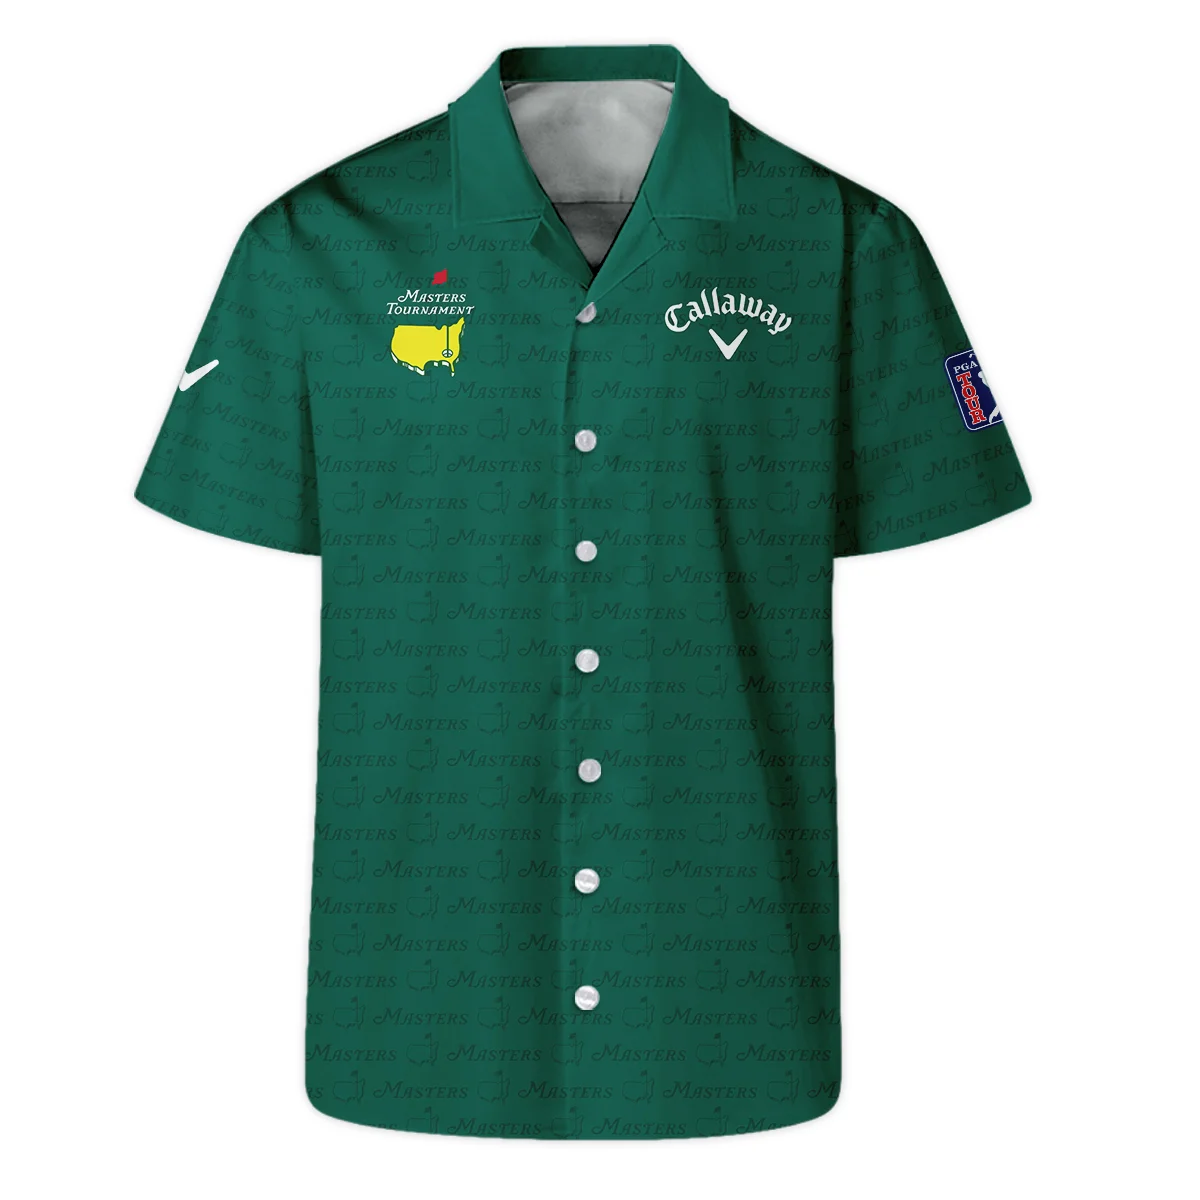 Golf Pattern Cup Green Masters Tournament Callaway Sleeveless Jacket Style Classic Sleeveless Jacket